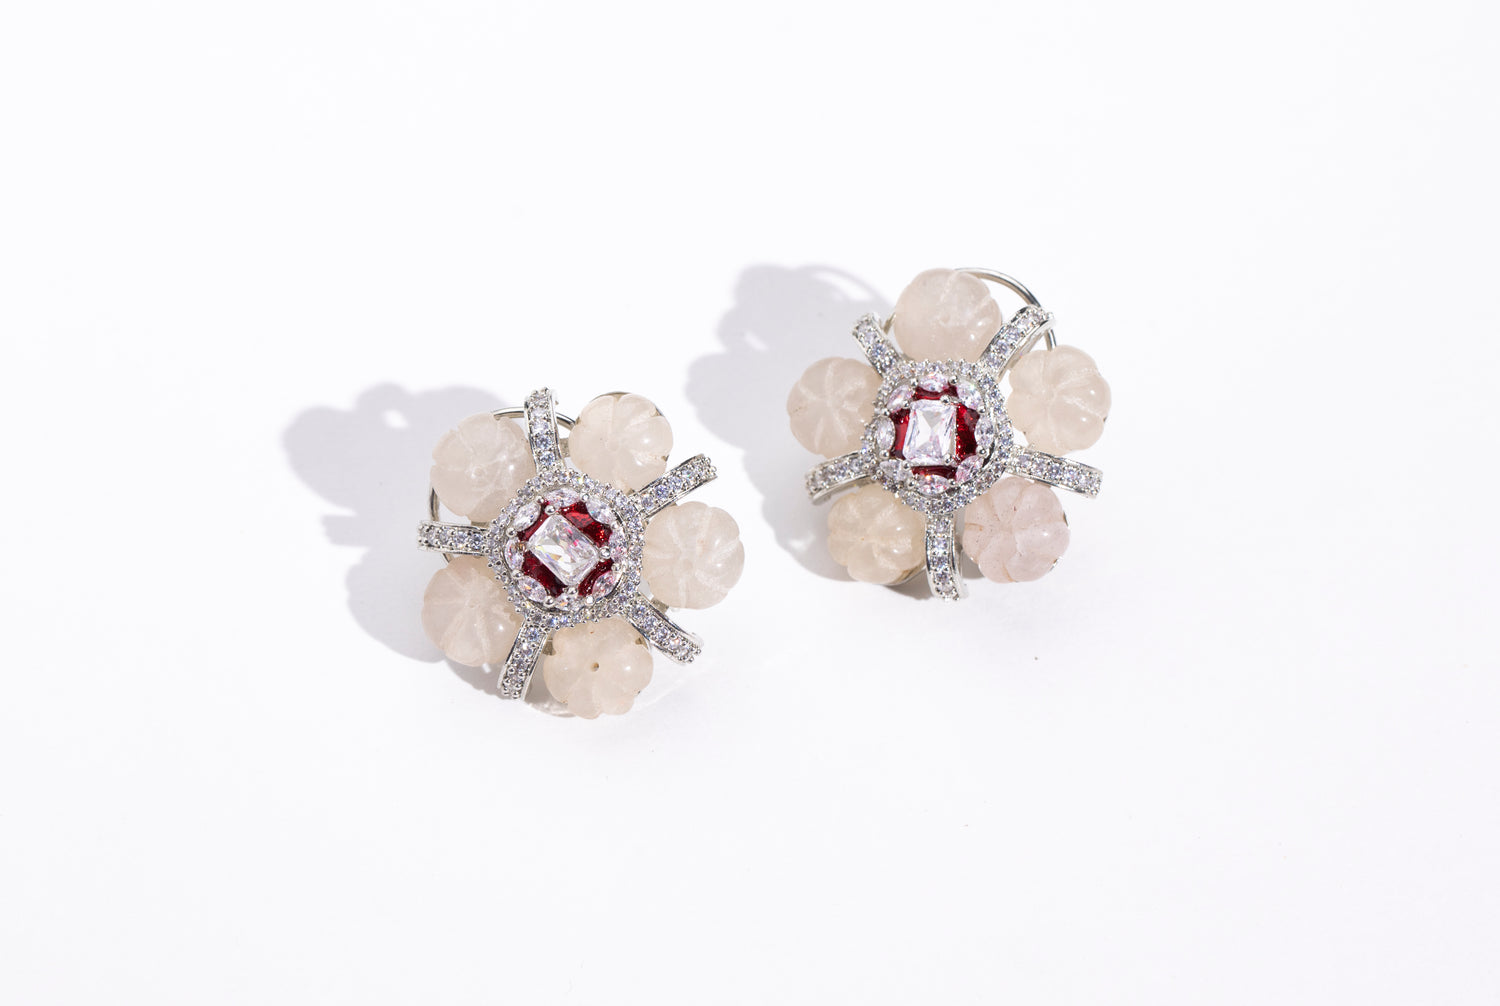 Statement Earrings with Sparkling Swarovski Stones